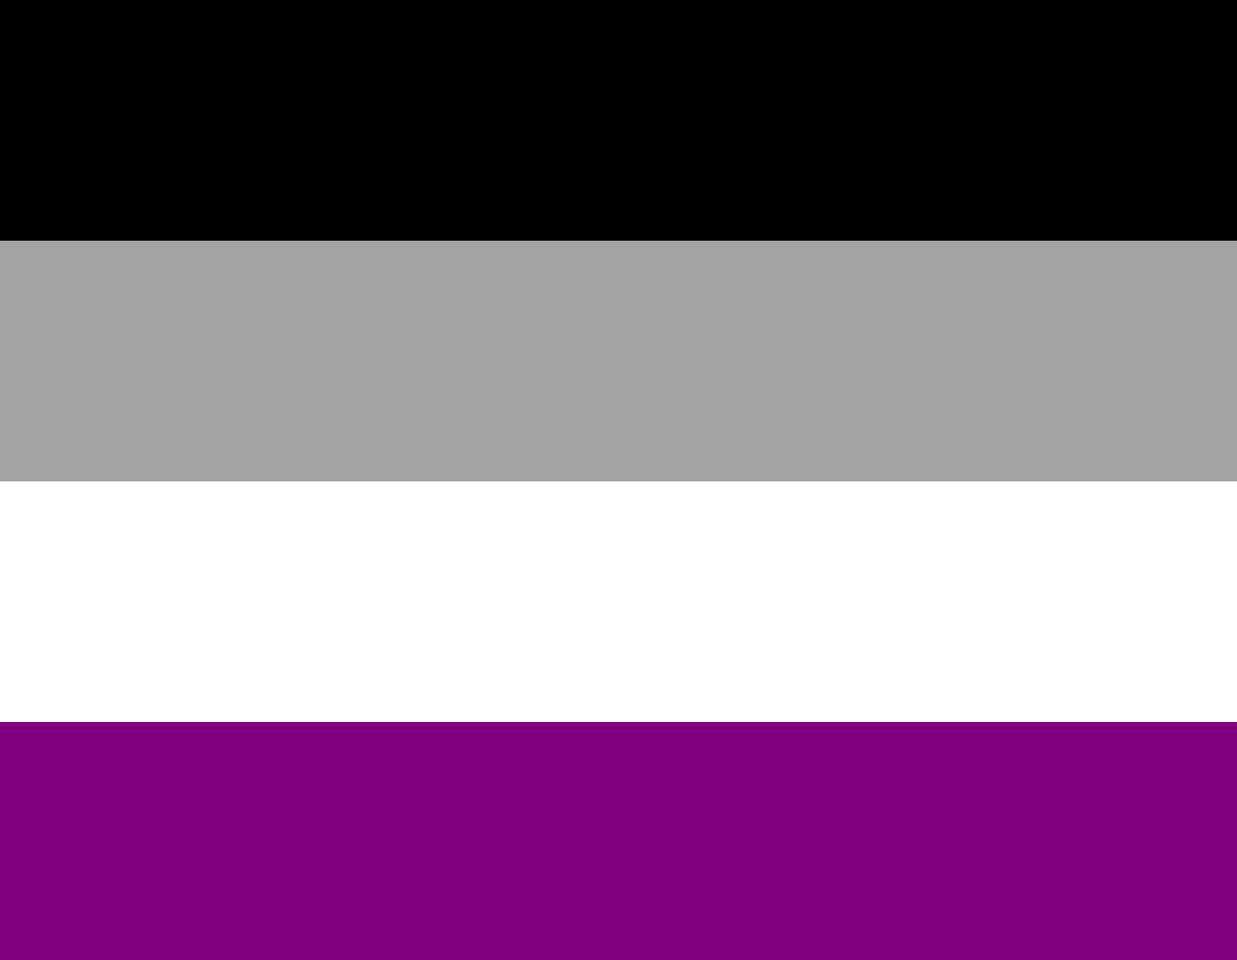 флаг гордости асексуалов / асов для моих товарищей-асов пазл онлайн